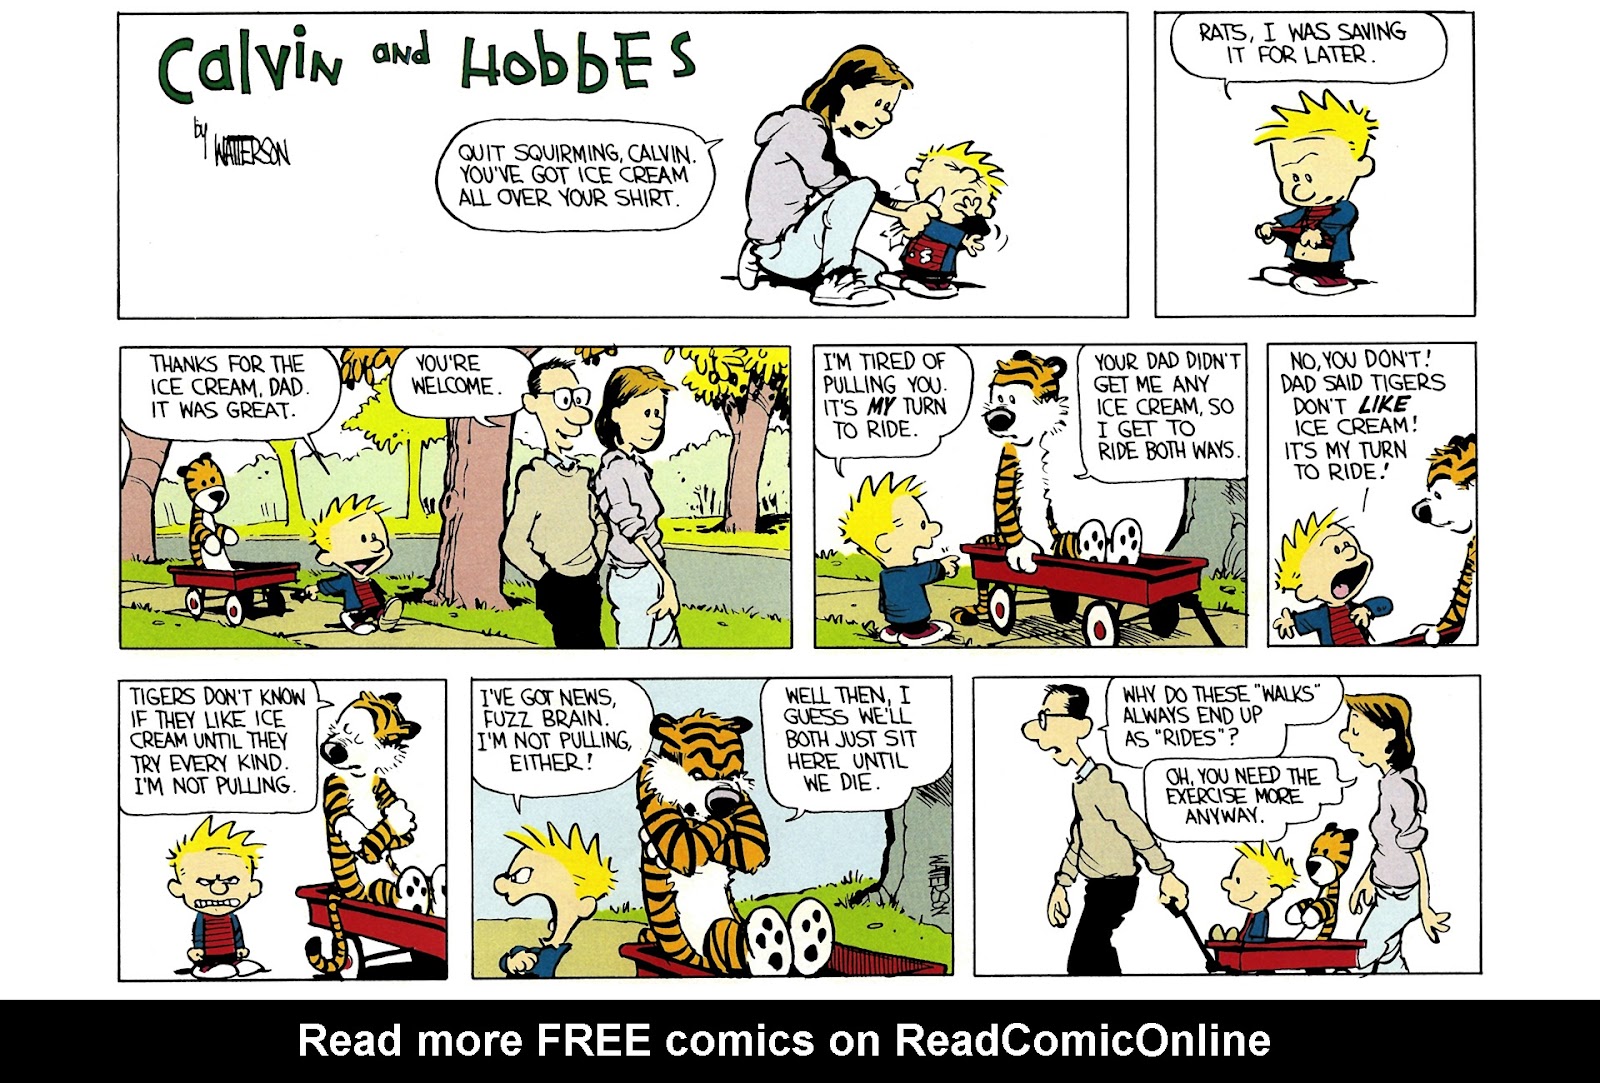 Calvin hobbes online